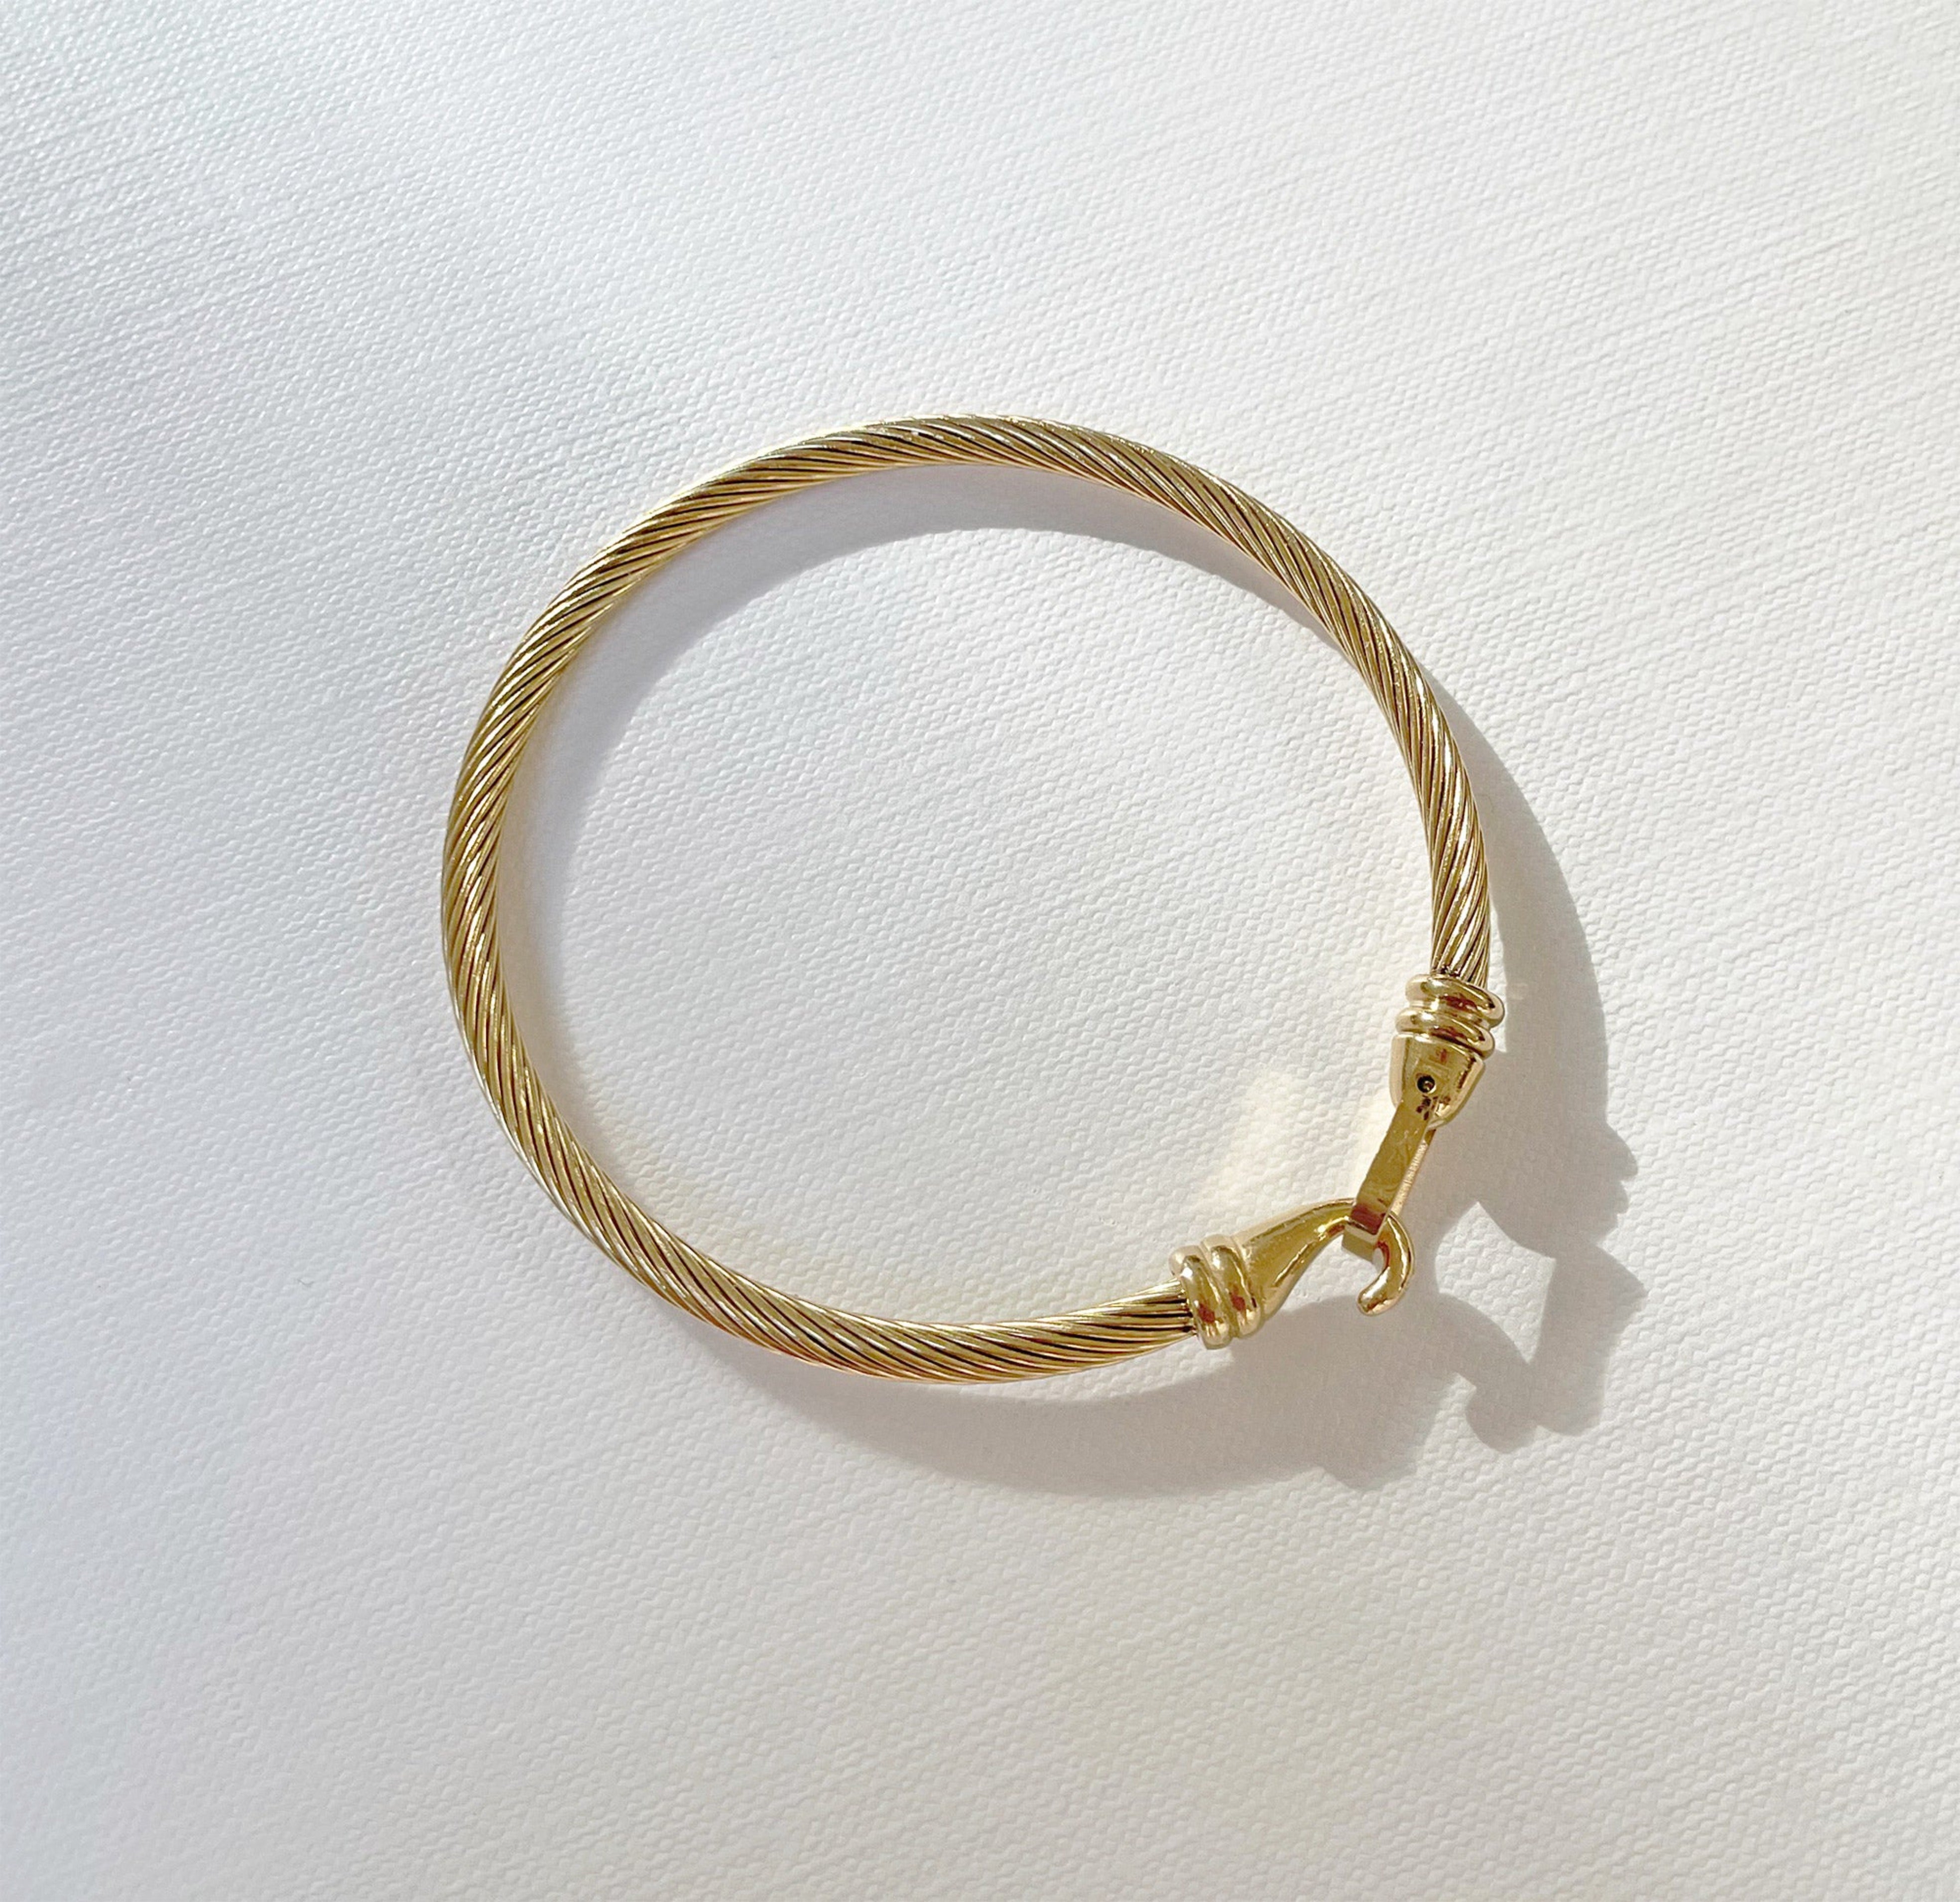 GOLD CABLE BUCKLE BRACELET waterproof jewelry